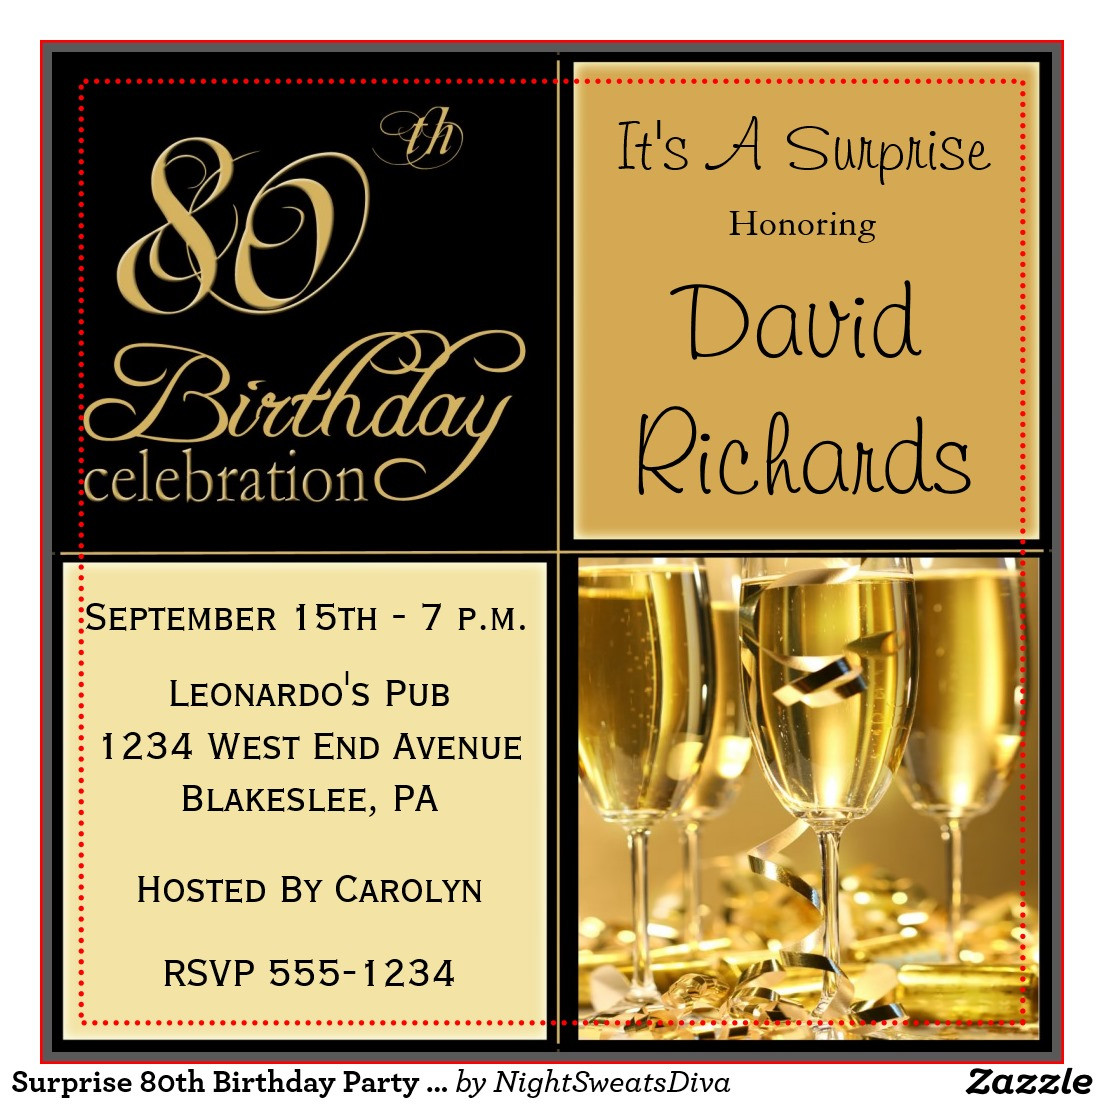 Birthday Celebration Invitation
 Free Surprise Birthday Party Invitations